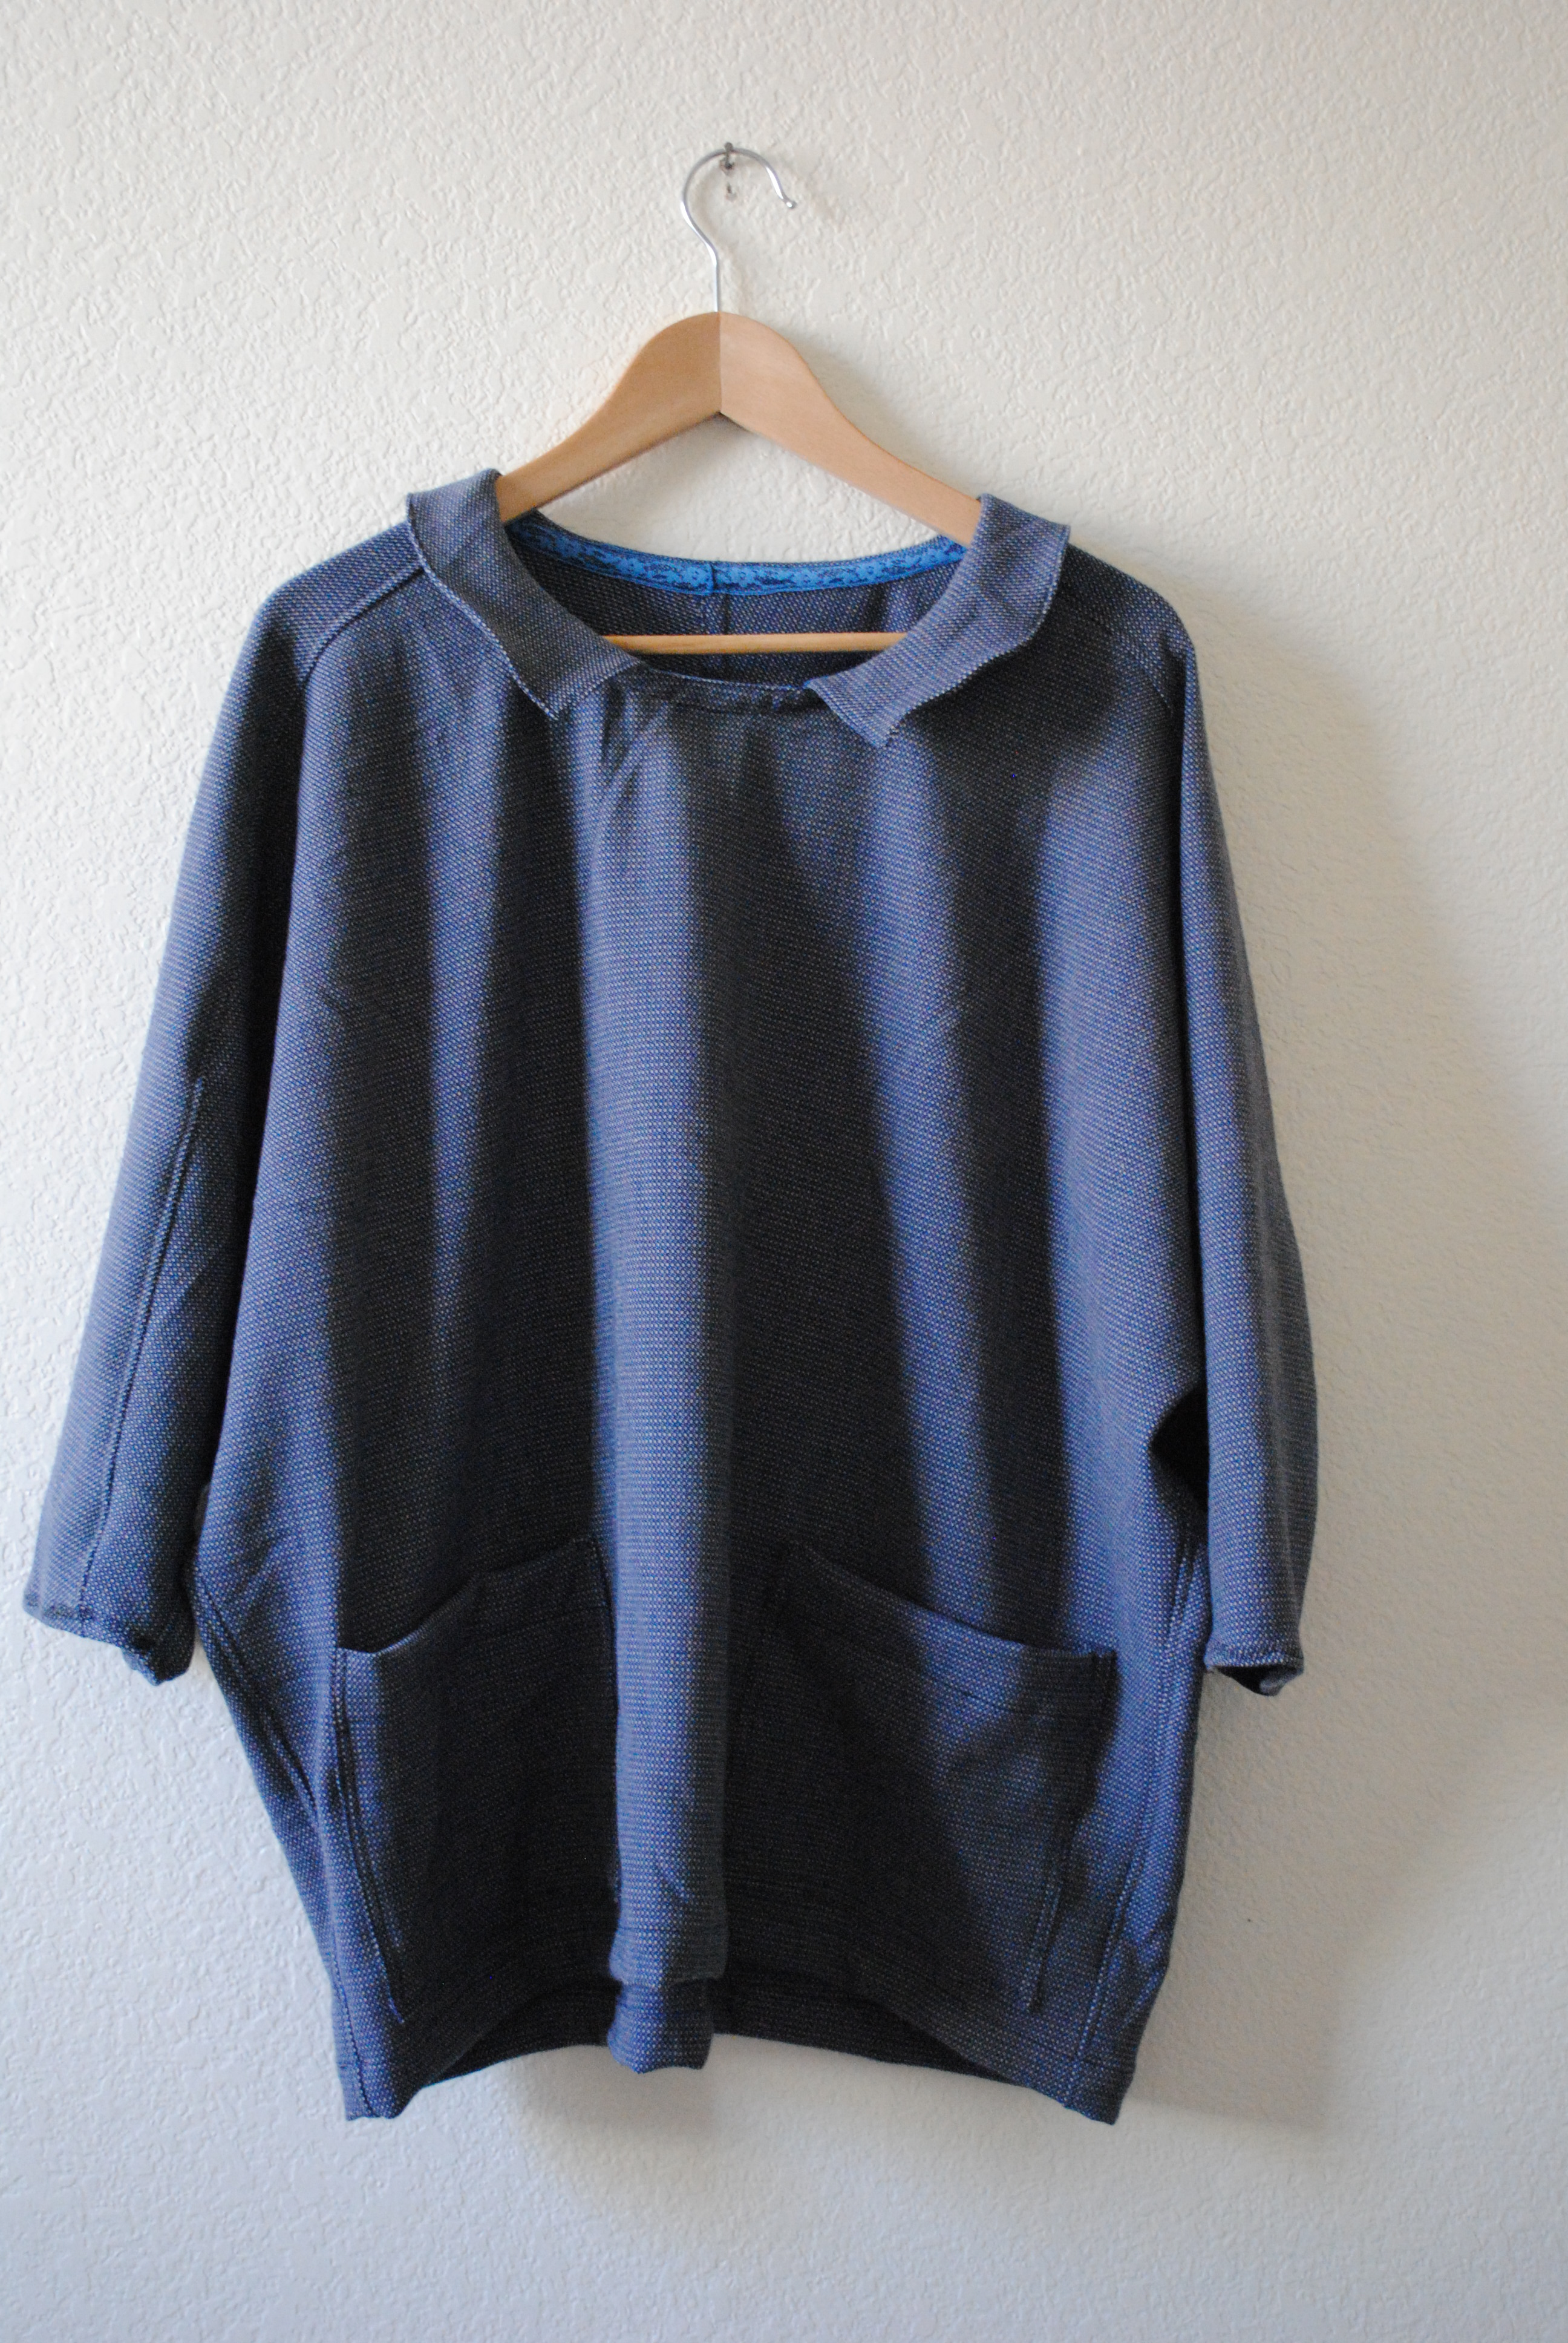 dolman shirt (no. 11) – Sewing Projects | BurdaStyle.com